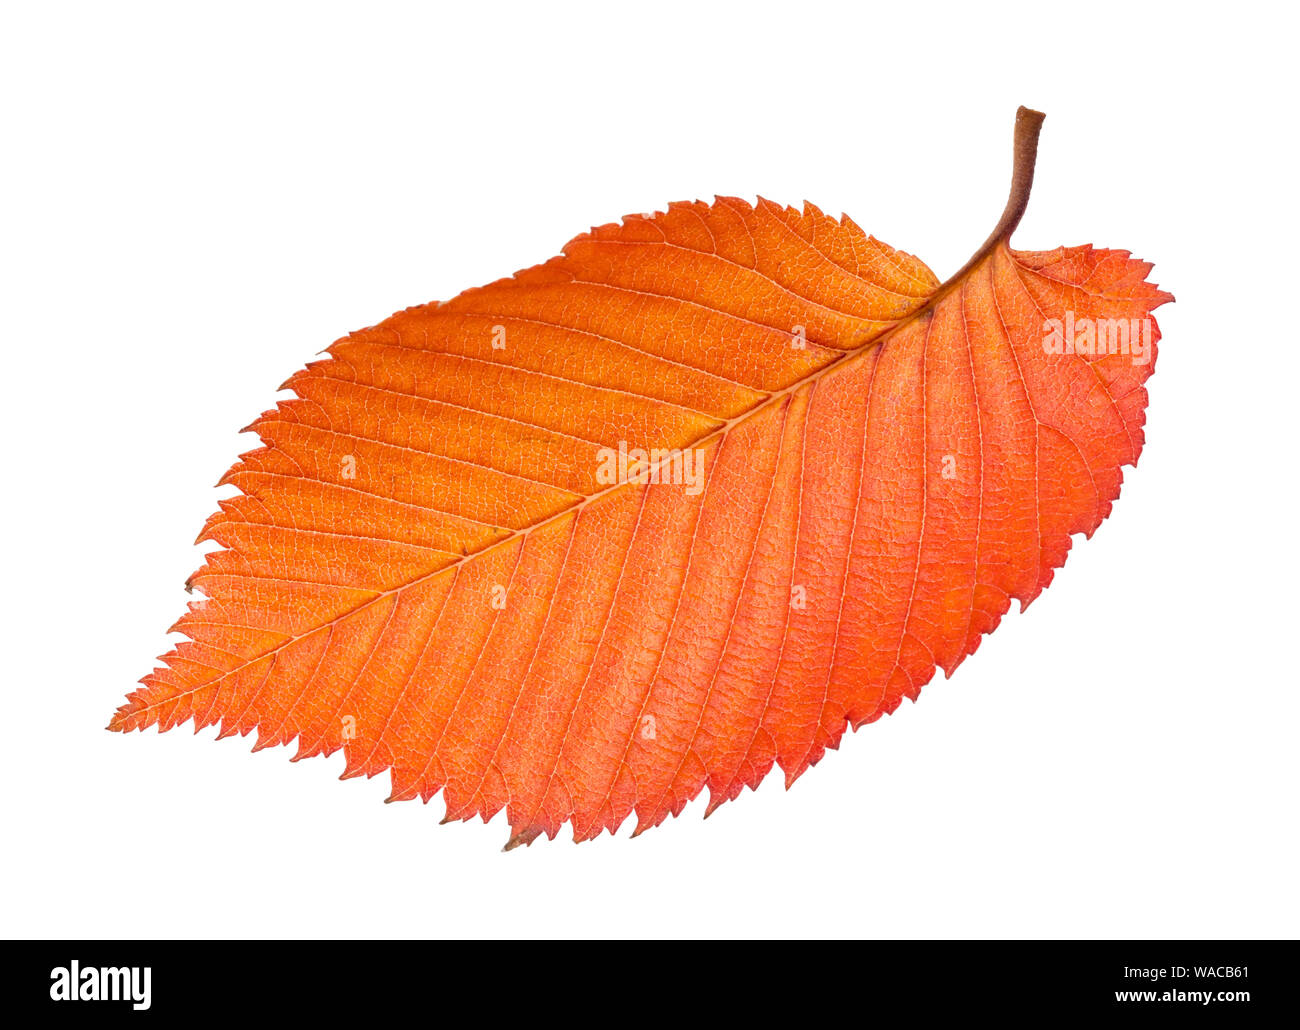 fallen orange leaf of elm tree cutout on white background Stock Photo